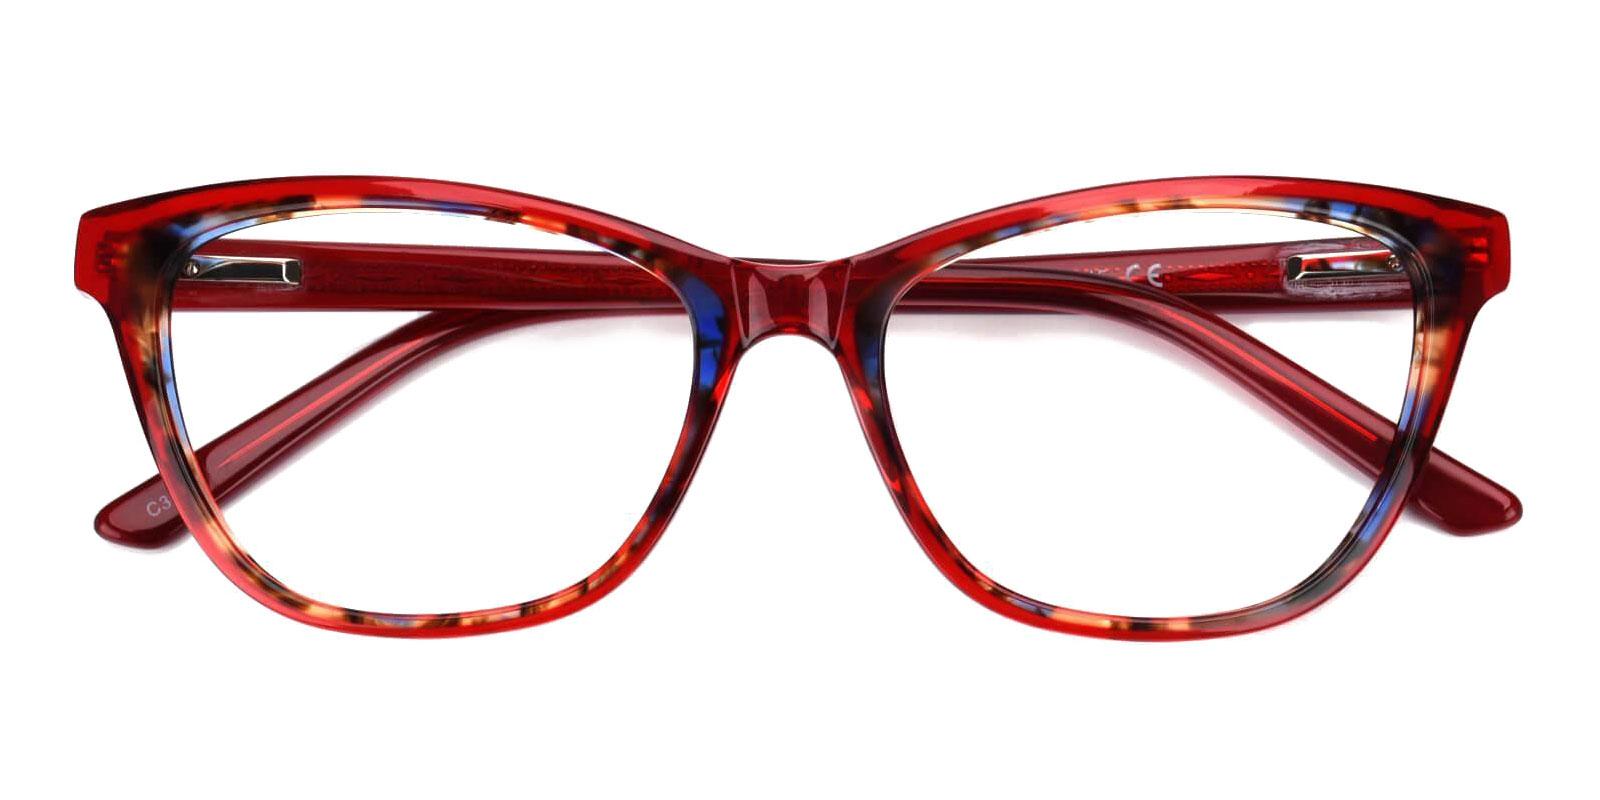 Strauss Red Acetate Eyeglasses , UniversalBridgeFit Frames from ABBE Glasses